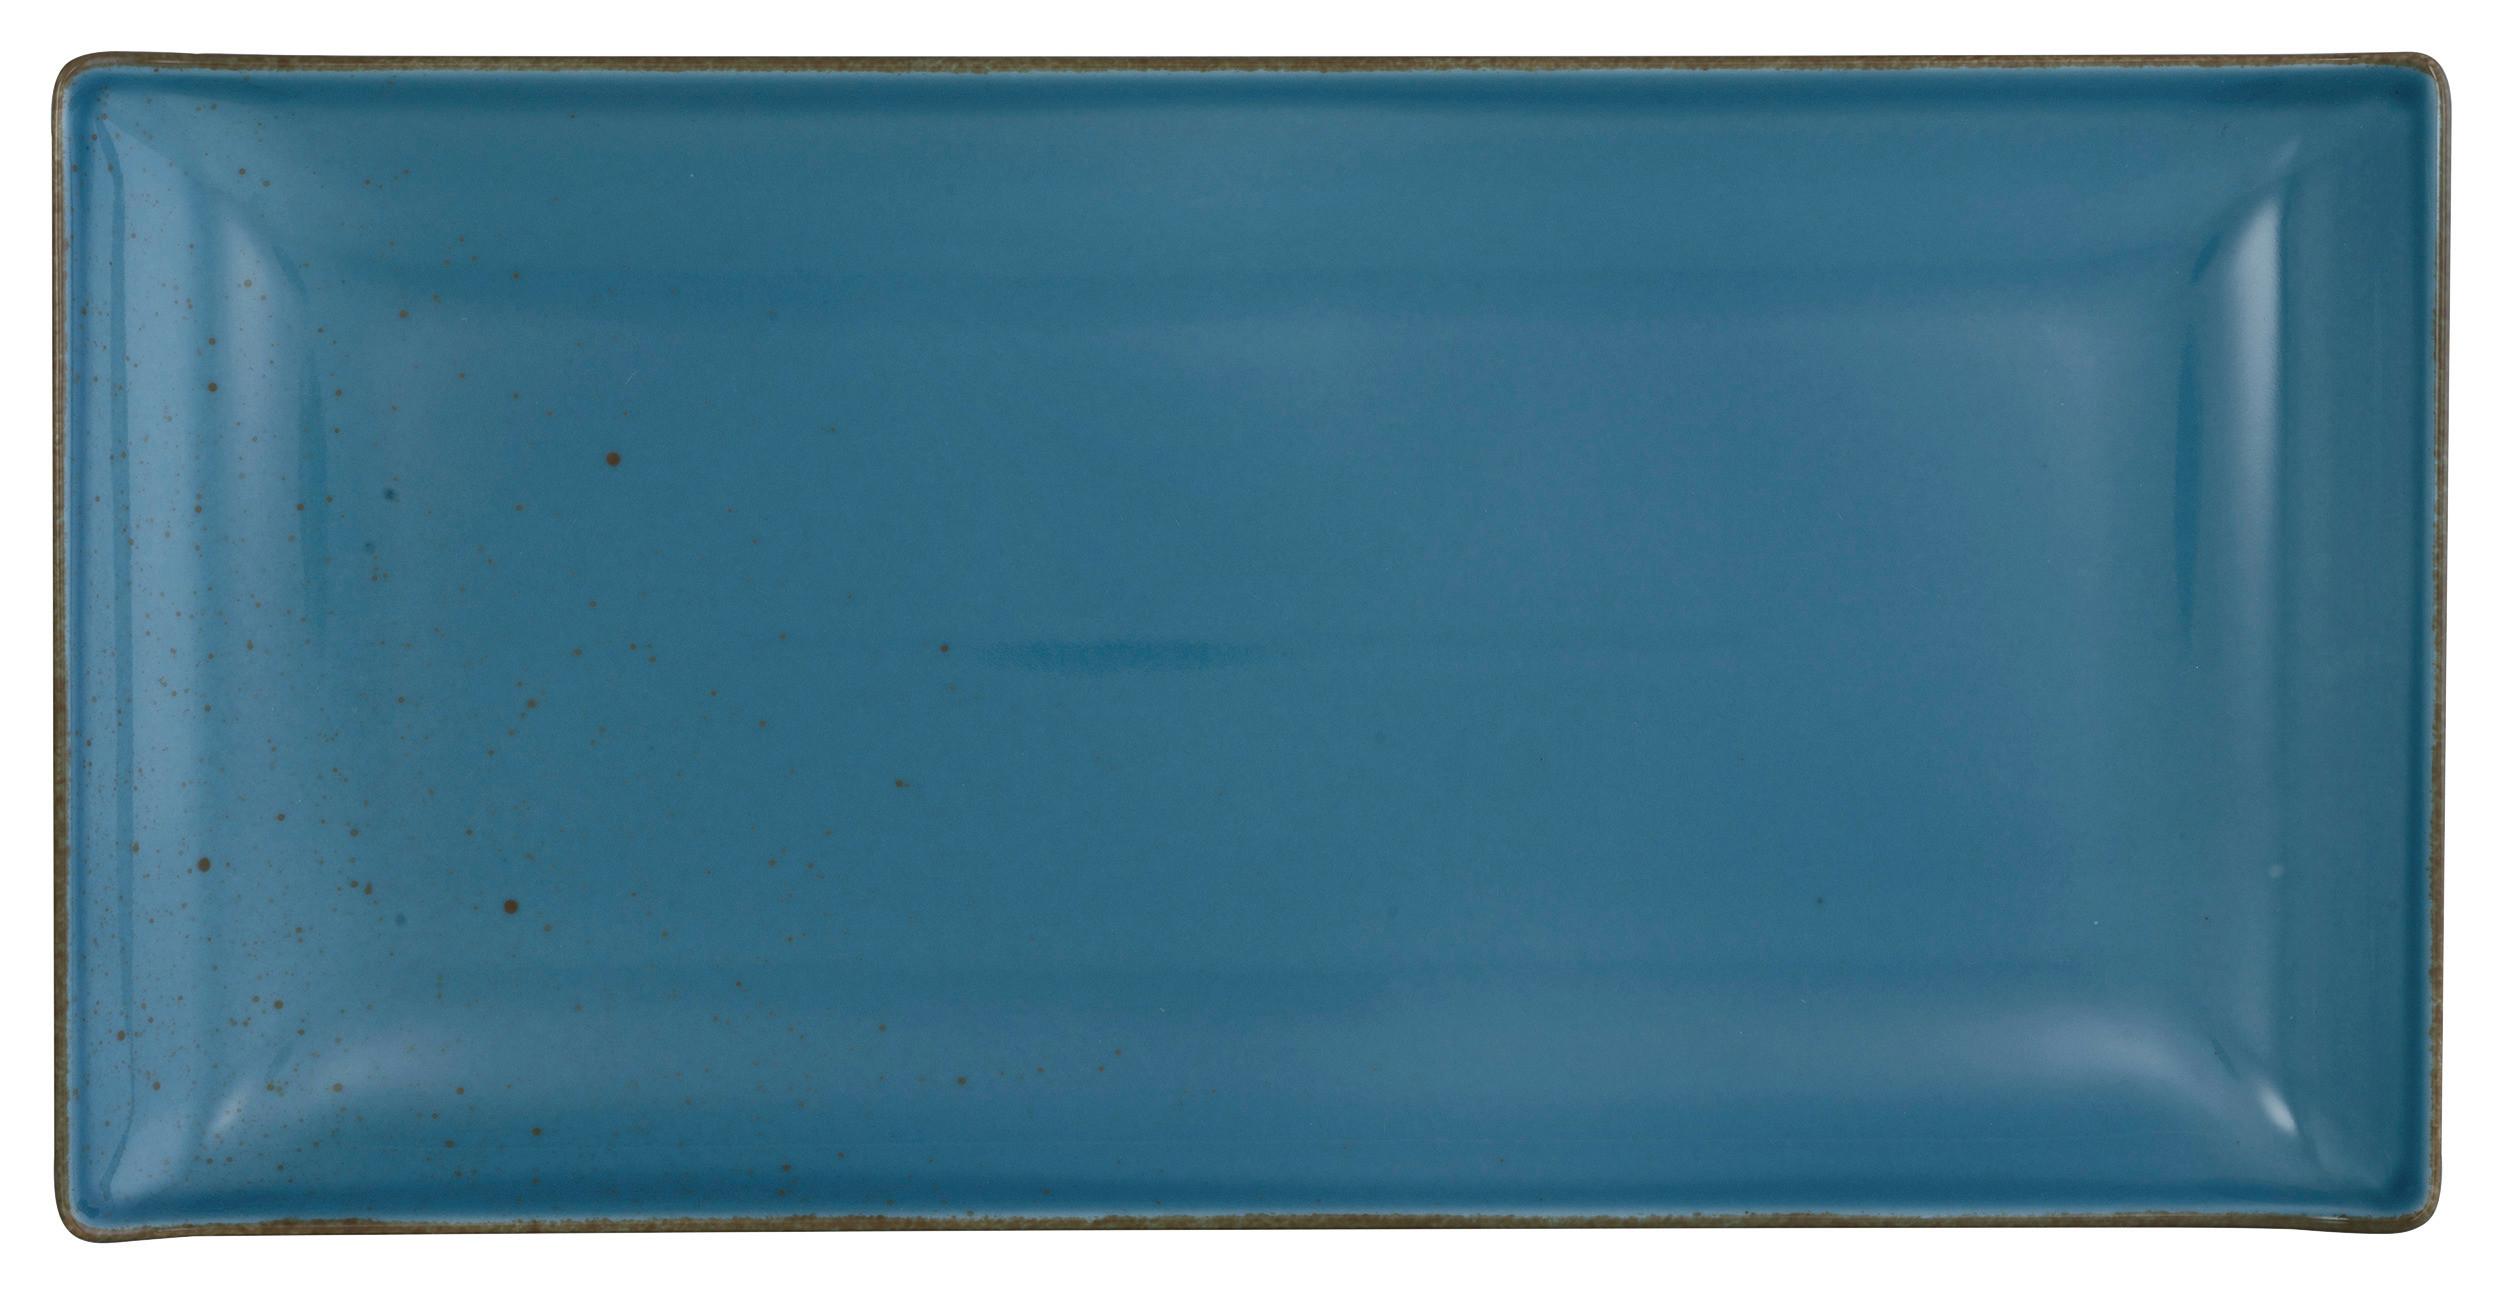 Servierplatte Capri in Blau - Blau, Modern, Keramik (32/16,5/2cm) - Premium Living